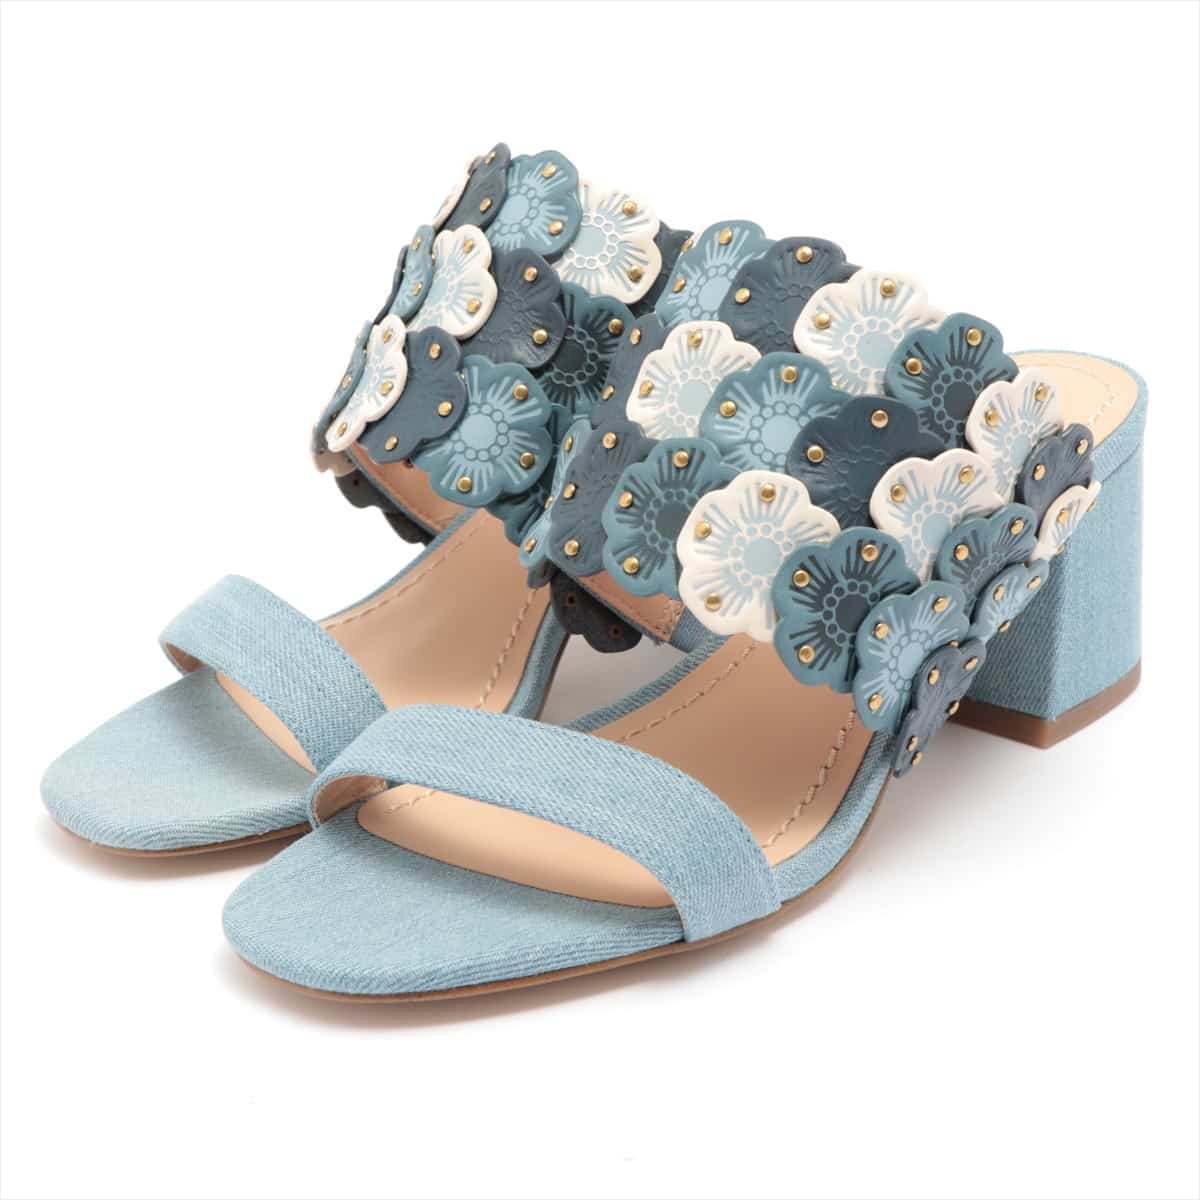 COACH Denim & leather Sandals 6.5 Ladies' Blue